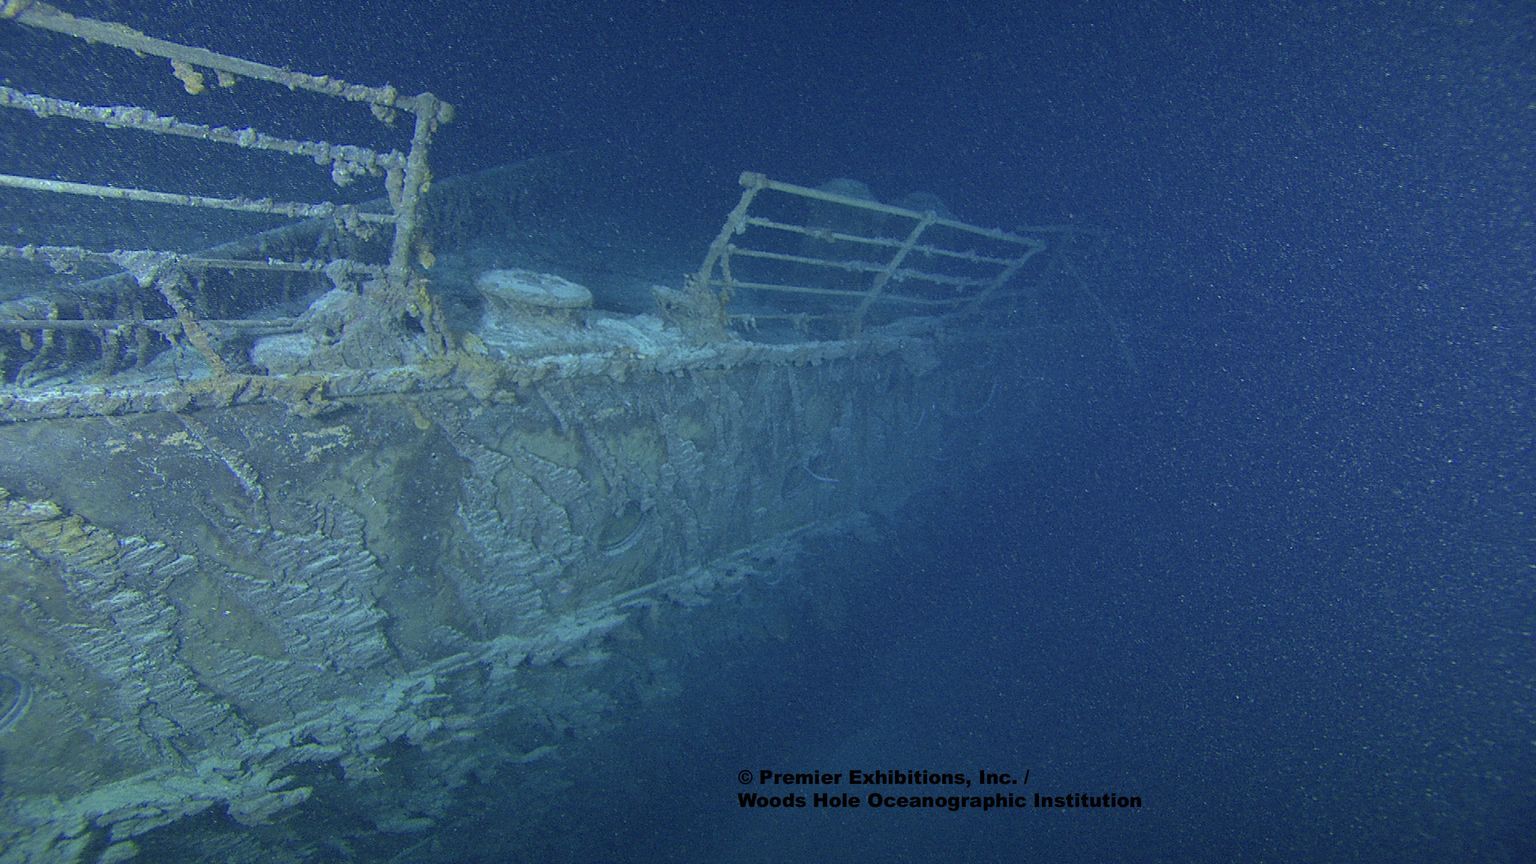 Premier Exhibitions, Inc. / Woods Hole Oceanographic Institutioni allveefoto ookeaniaurikust Titanic, mis uppus 15. aprillil 1912 Atlandi ookeani põhjaosas